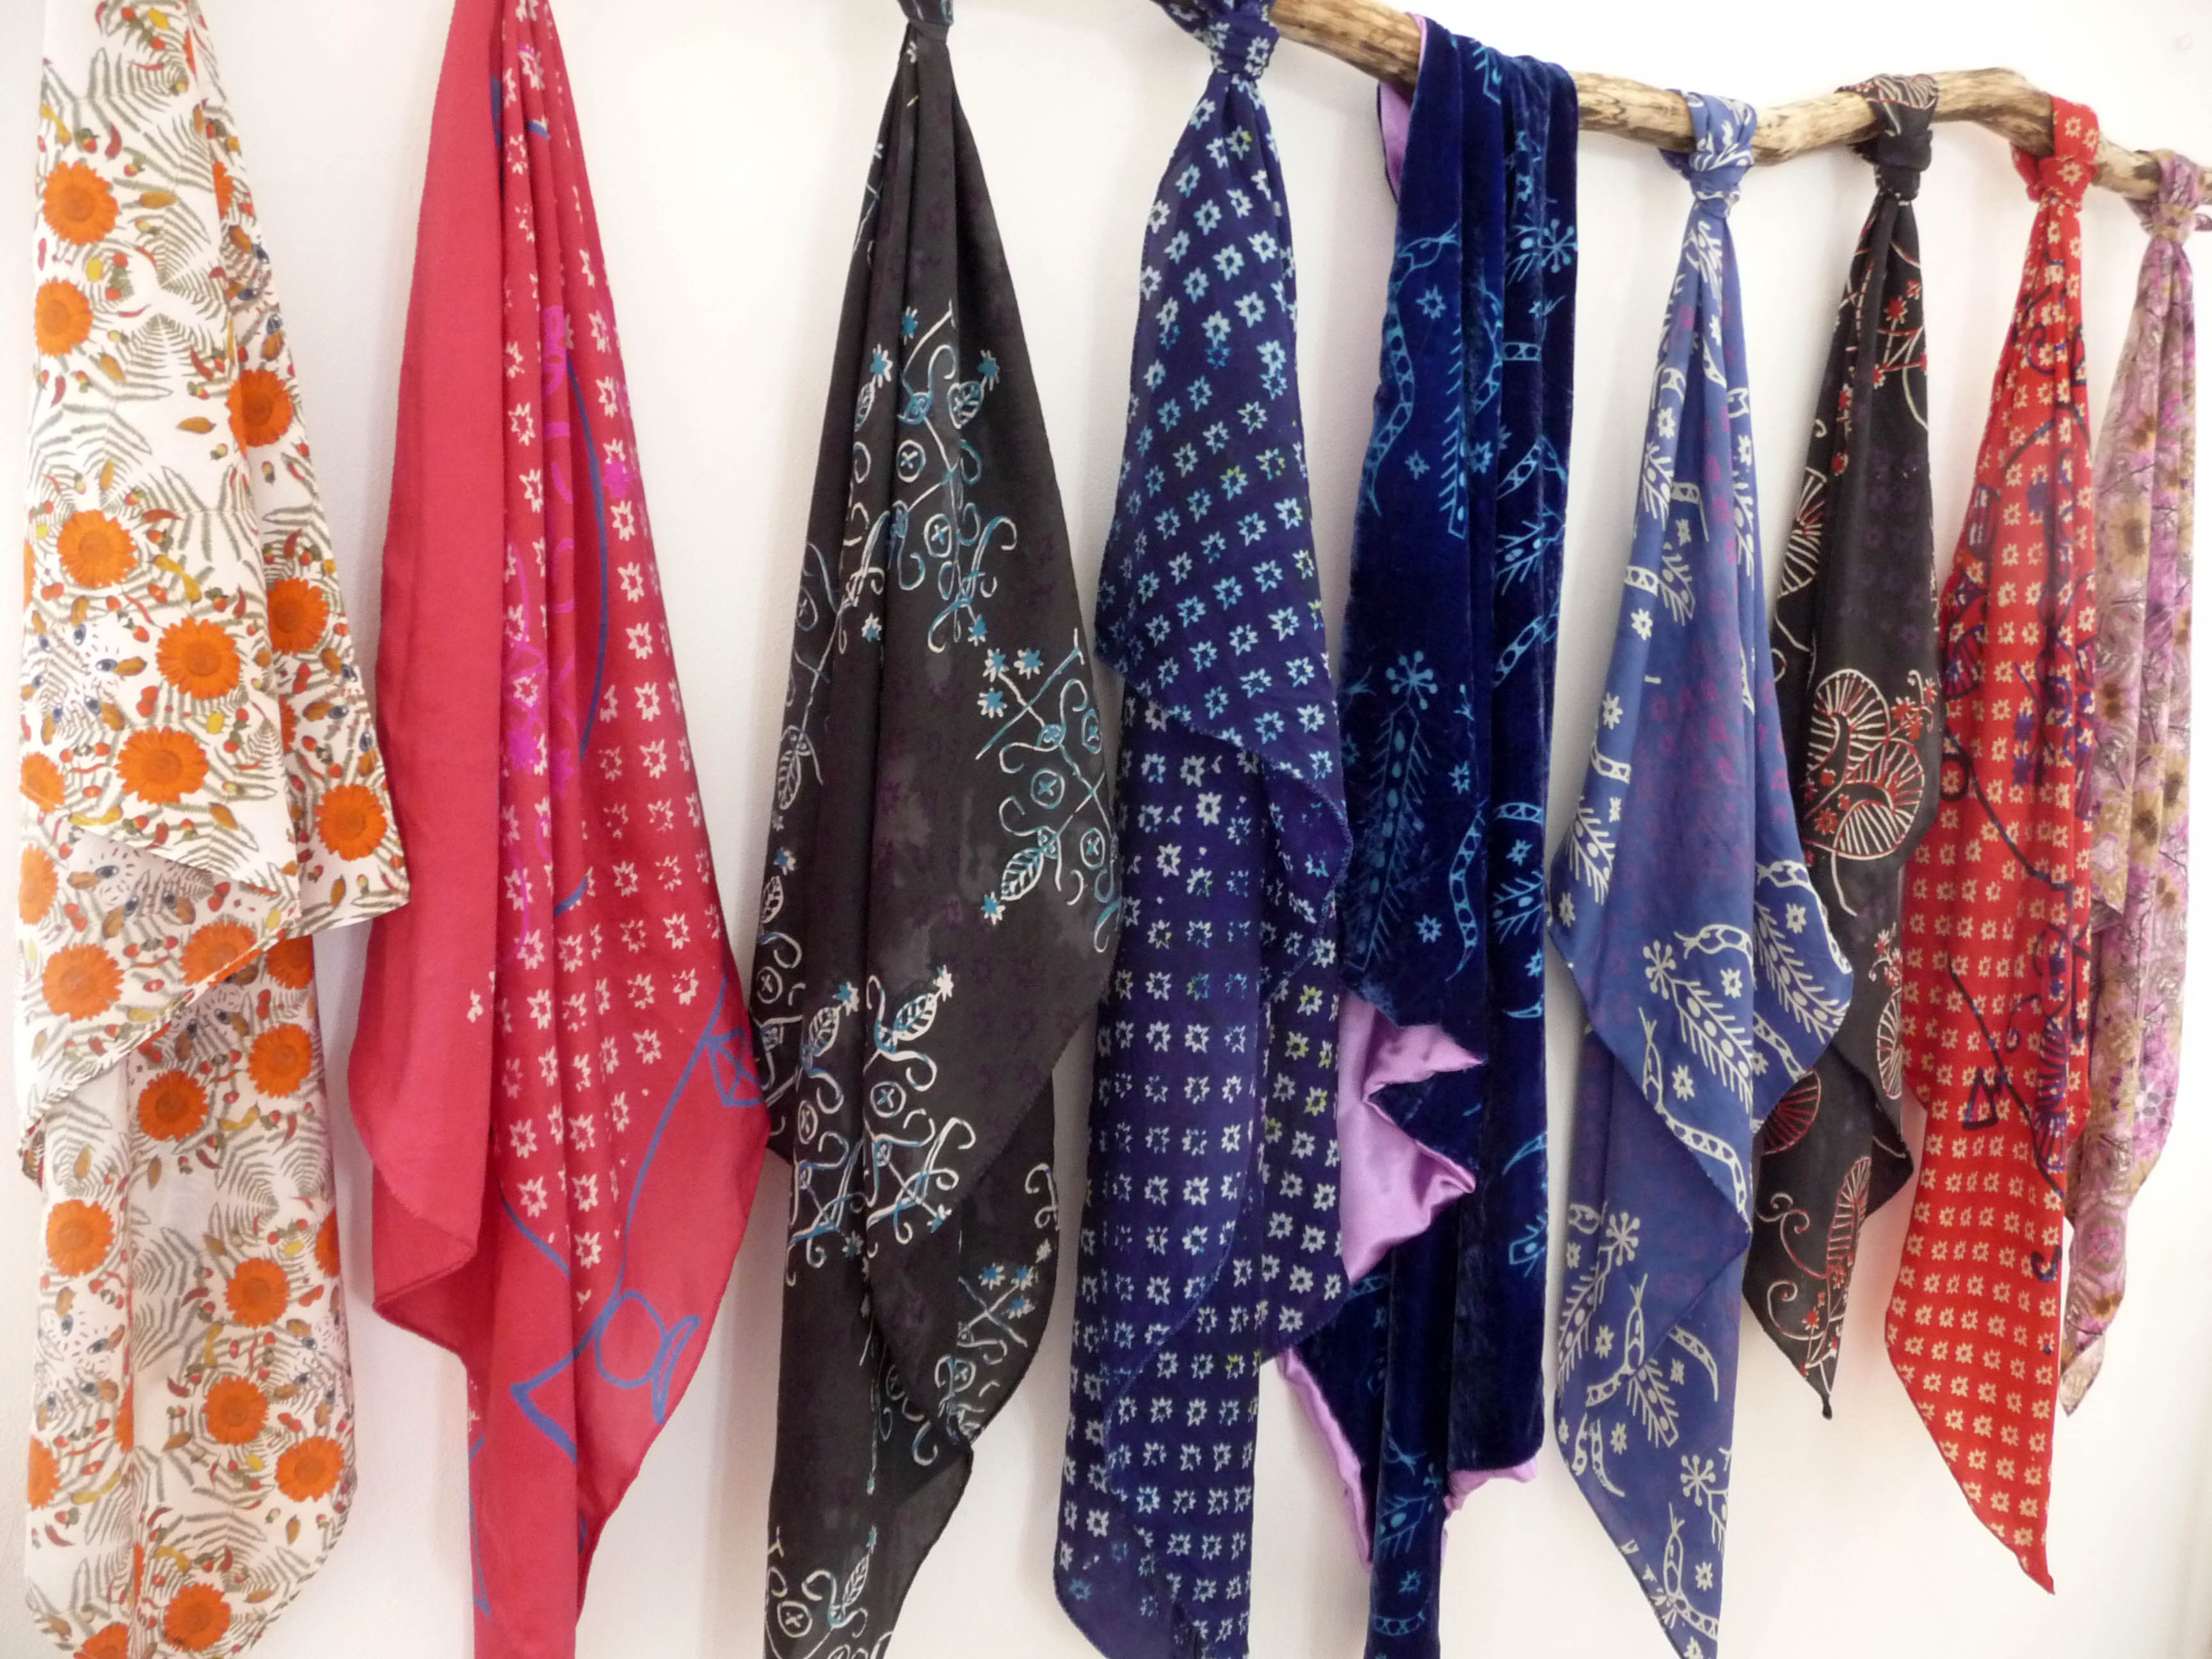 Screen printed scarves by Georgia Kane Frazer, Liverpool Hope Univ Art Degree Show 2014